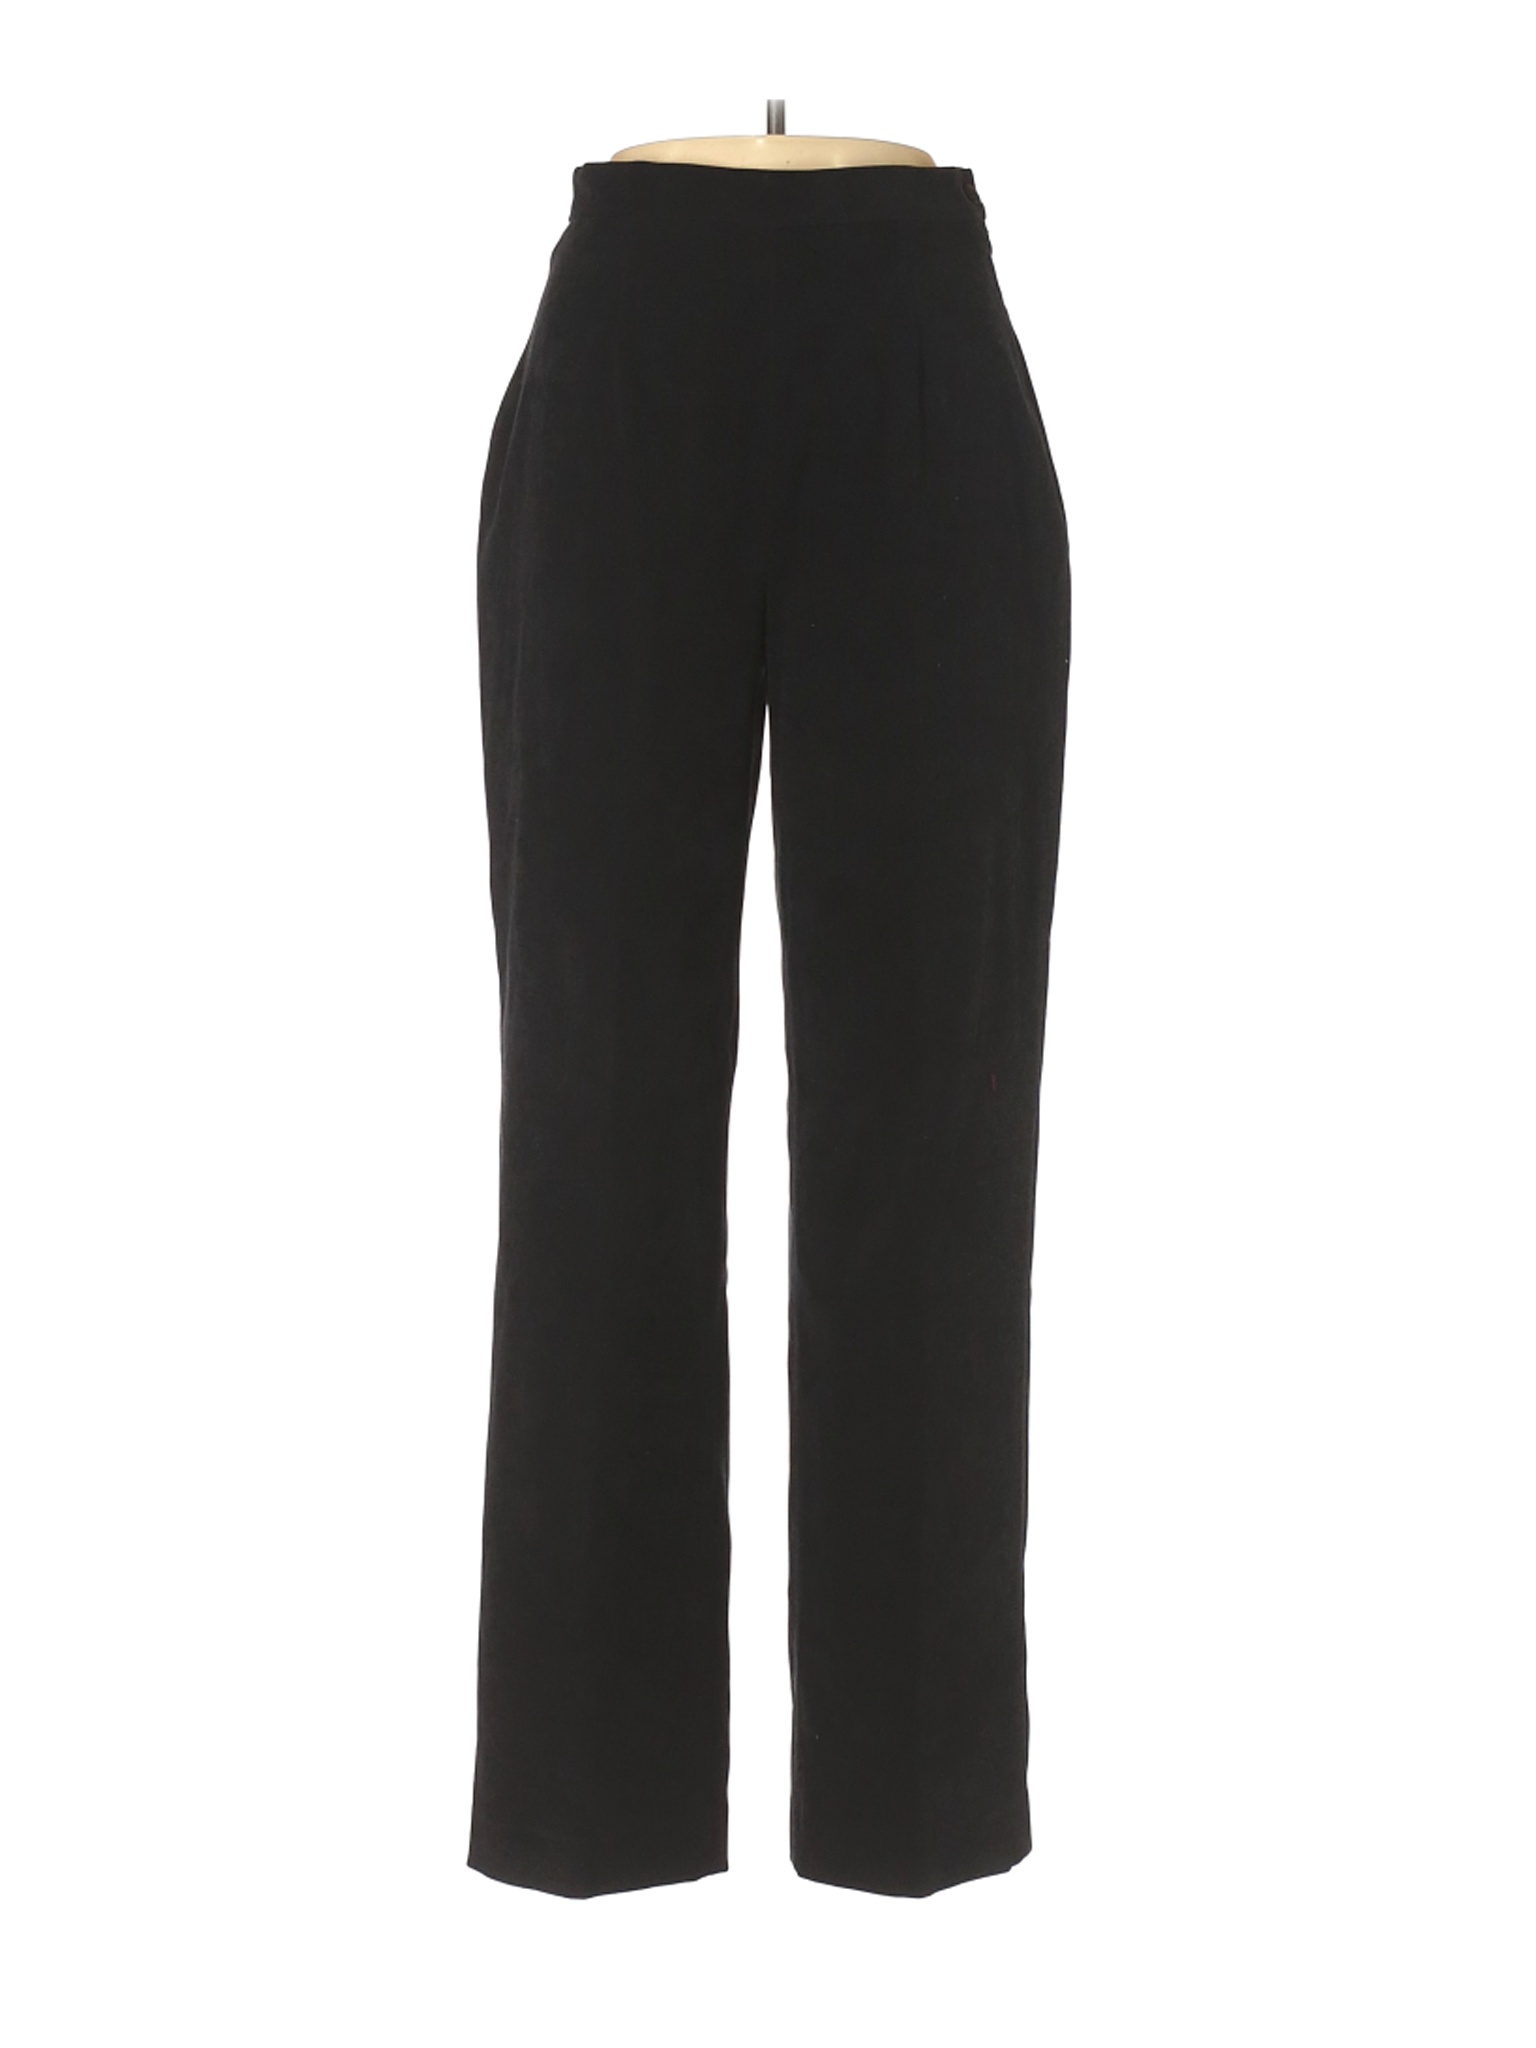 Focus 2000 Women Black Dress Pants 10 | eBay